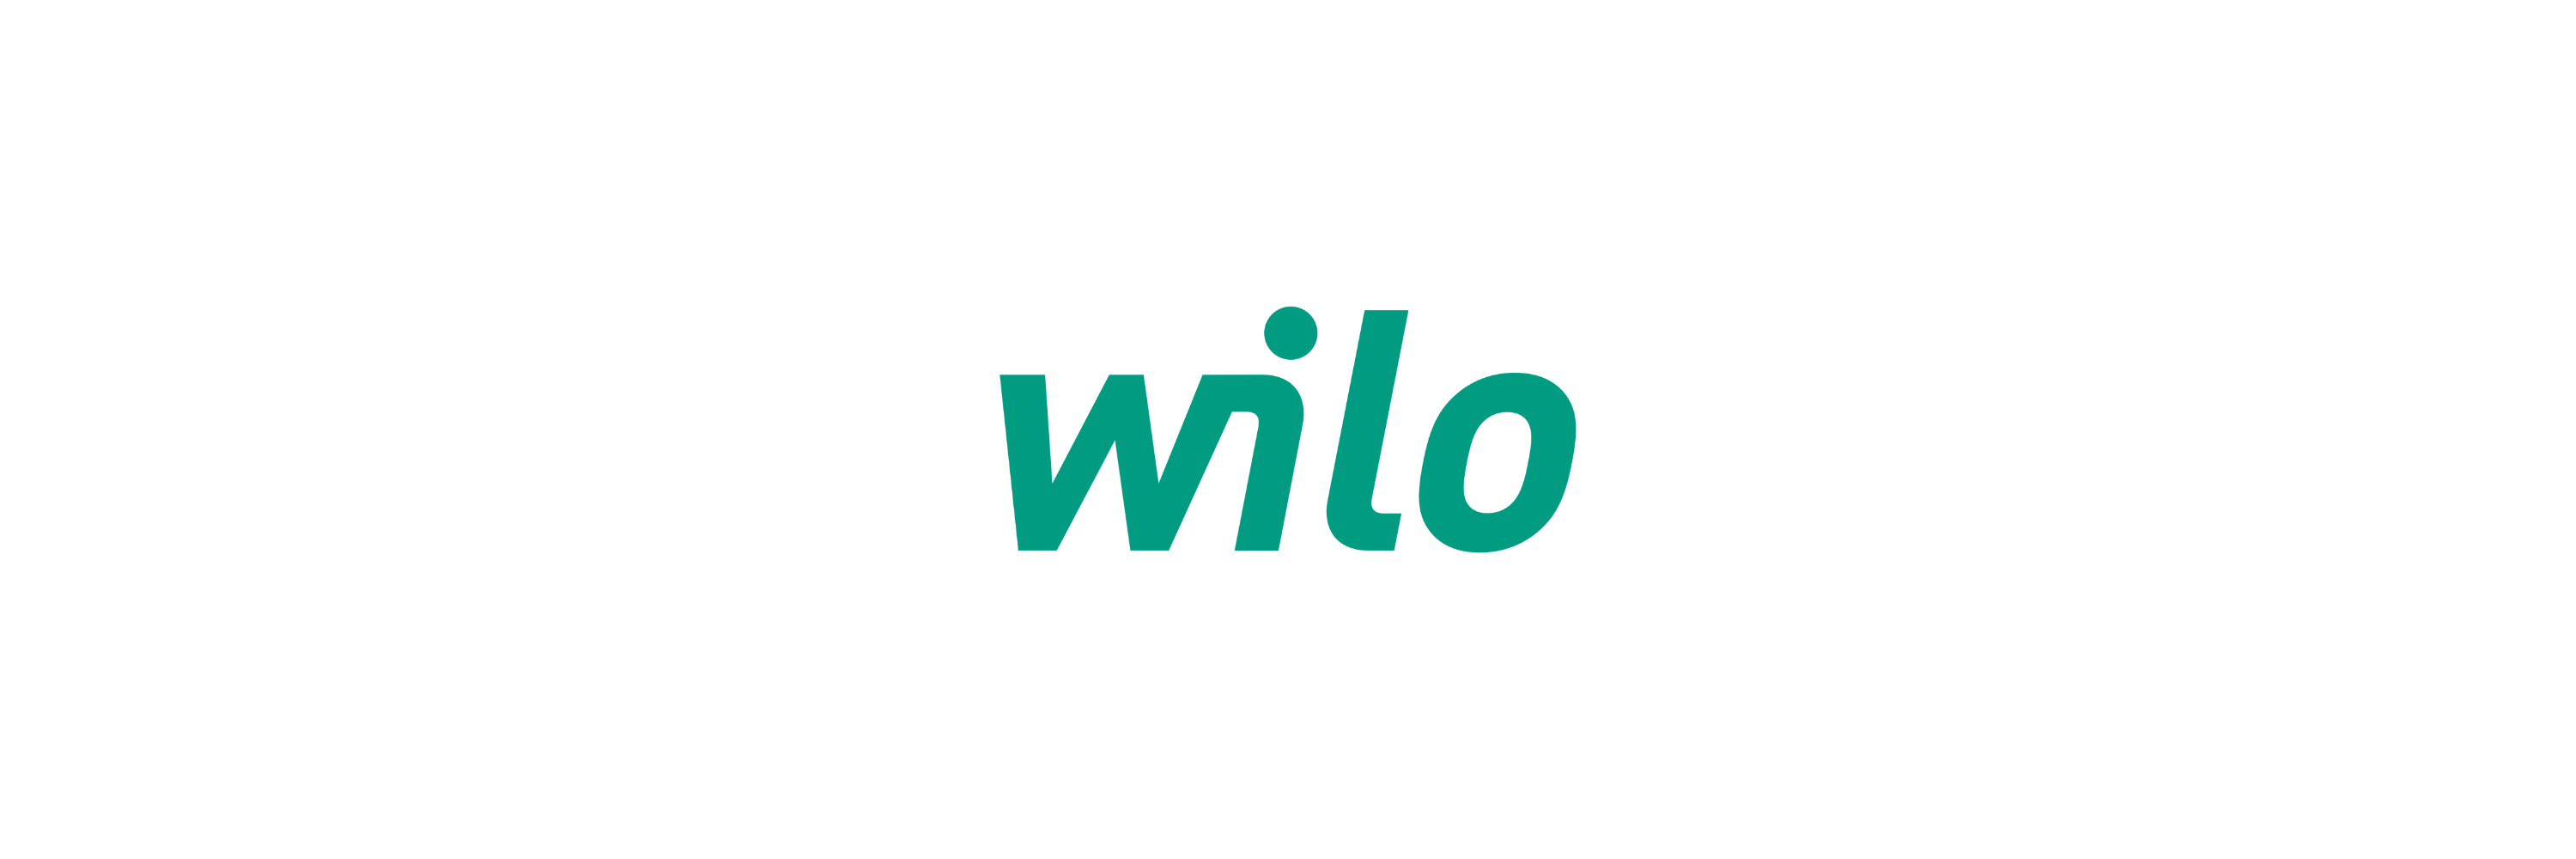 Wilo - Klenk Maschinenhandel